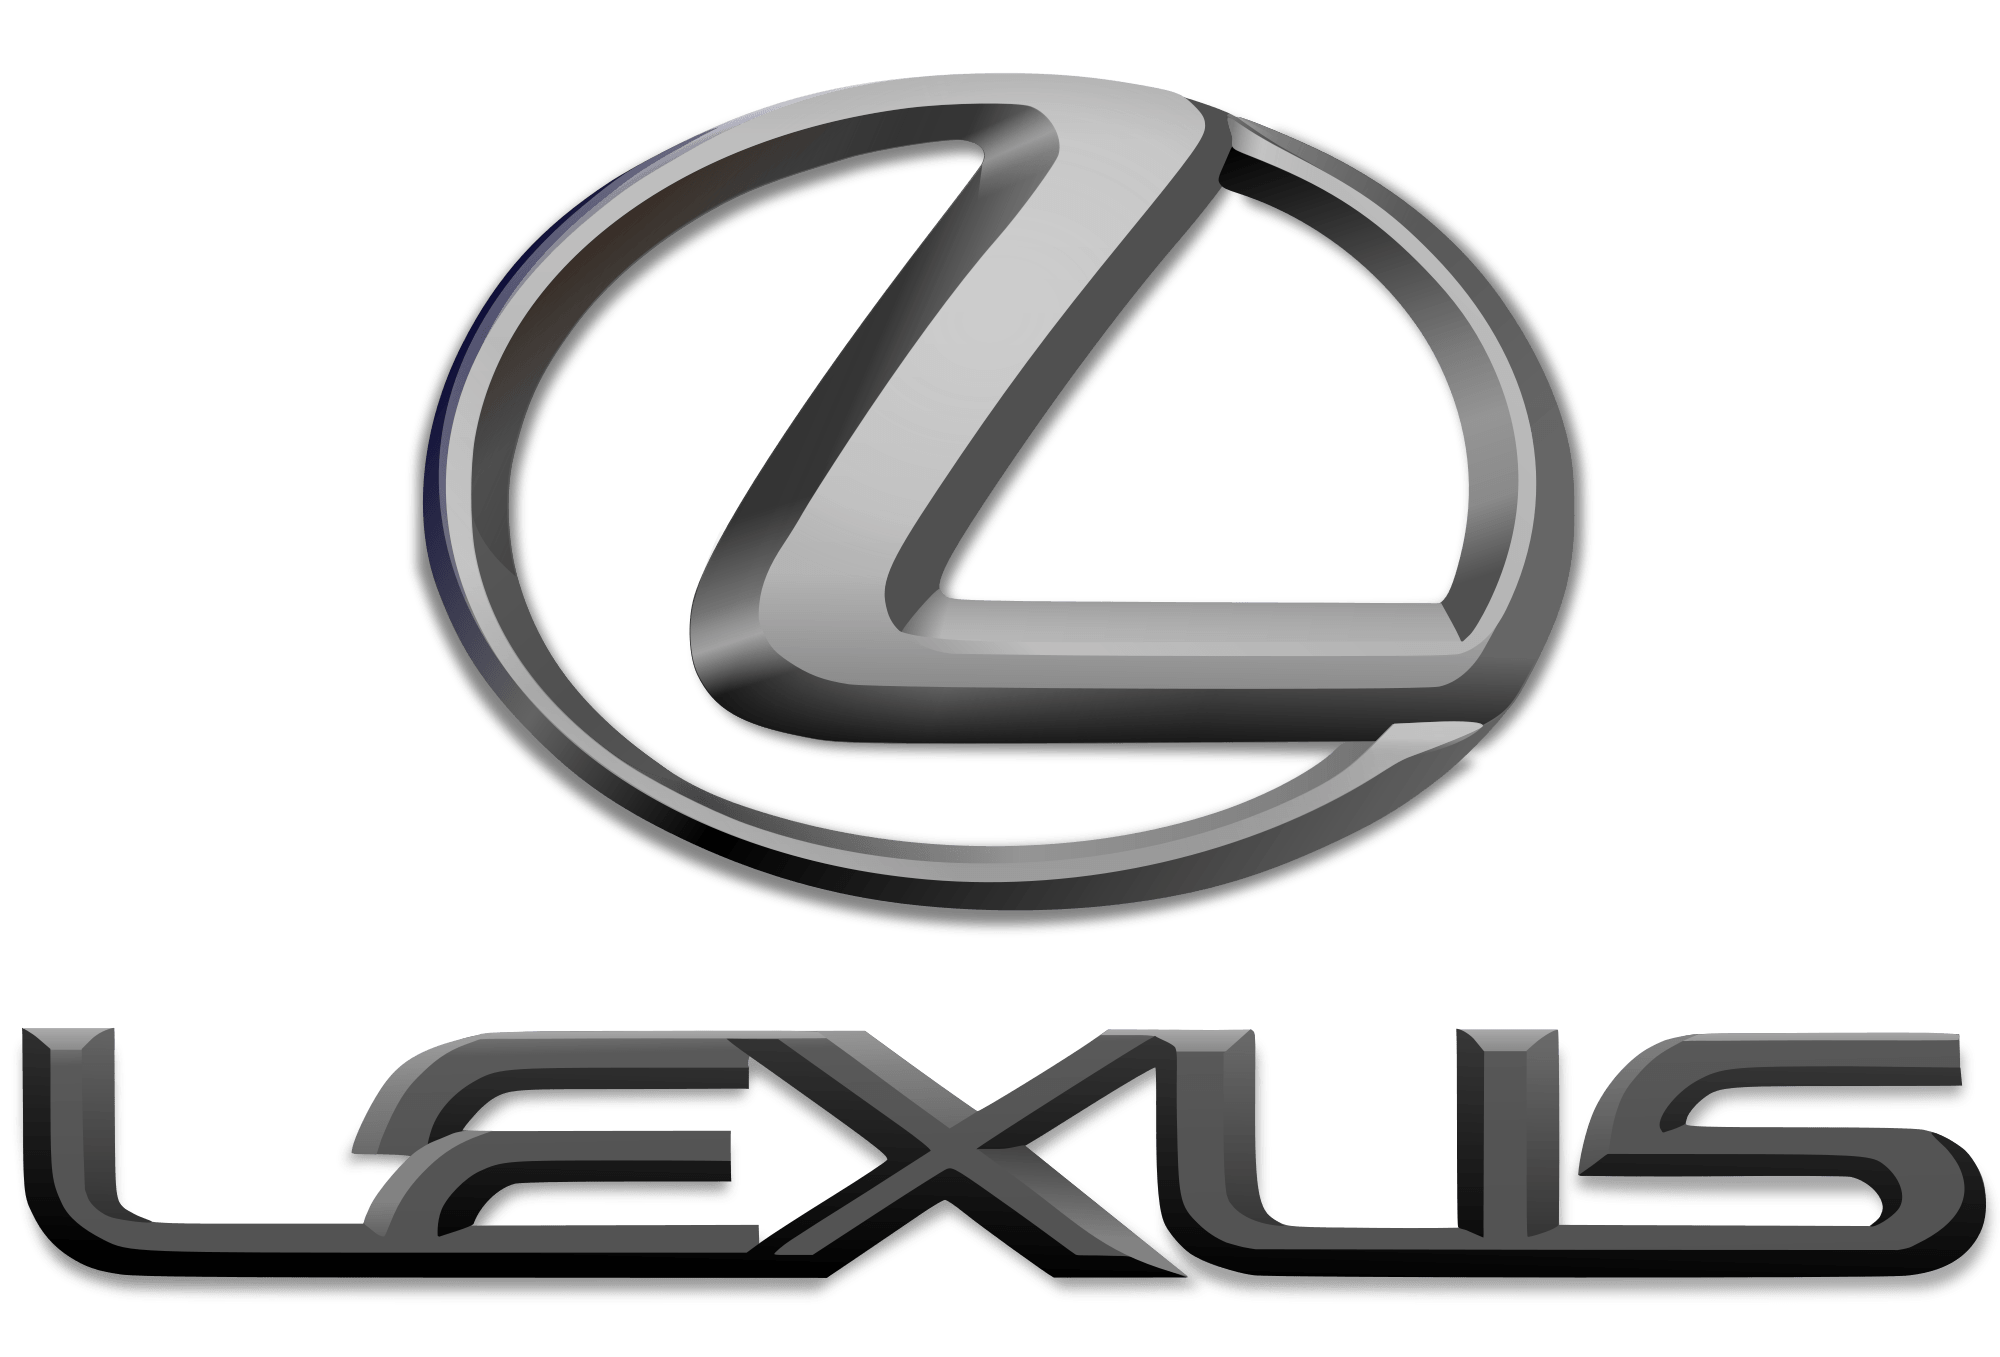 Auto Symbol Car Logo - Lexus Logo, Lexus Car Symbol Meaning And History | Car Brand Names ...